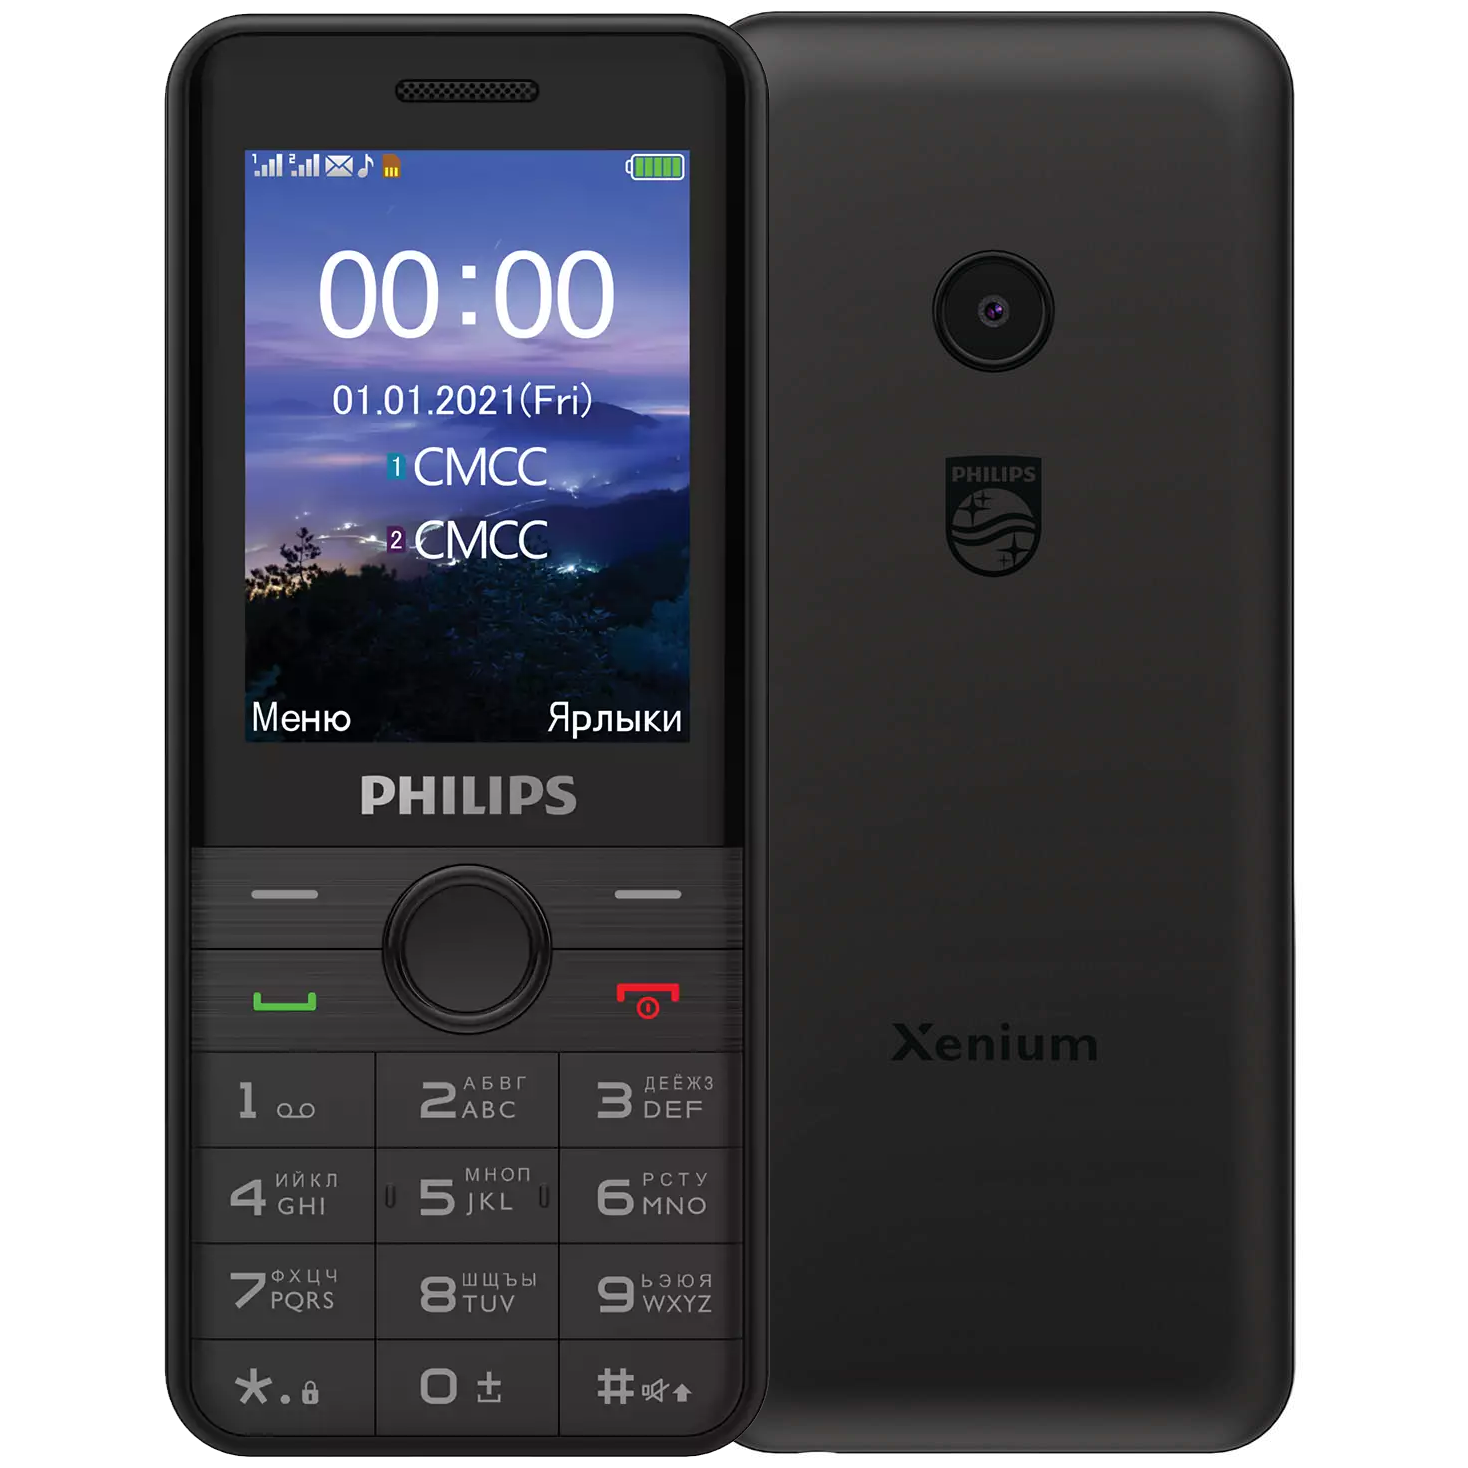 Philips xenium e182. Philips Xenium e590. Philips e590 Xenium Black. Philips Xenium e185. Мобильный телефон Philips Xenium e590.